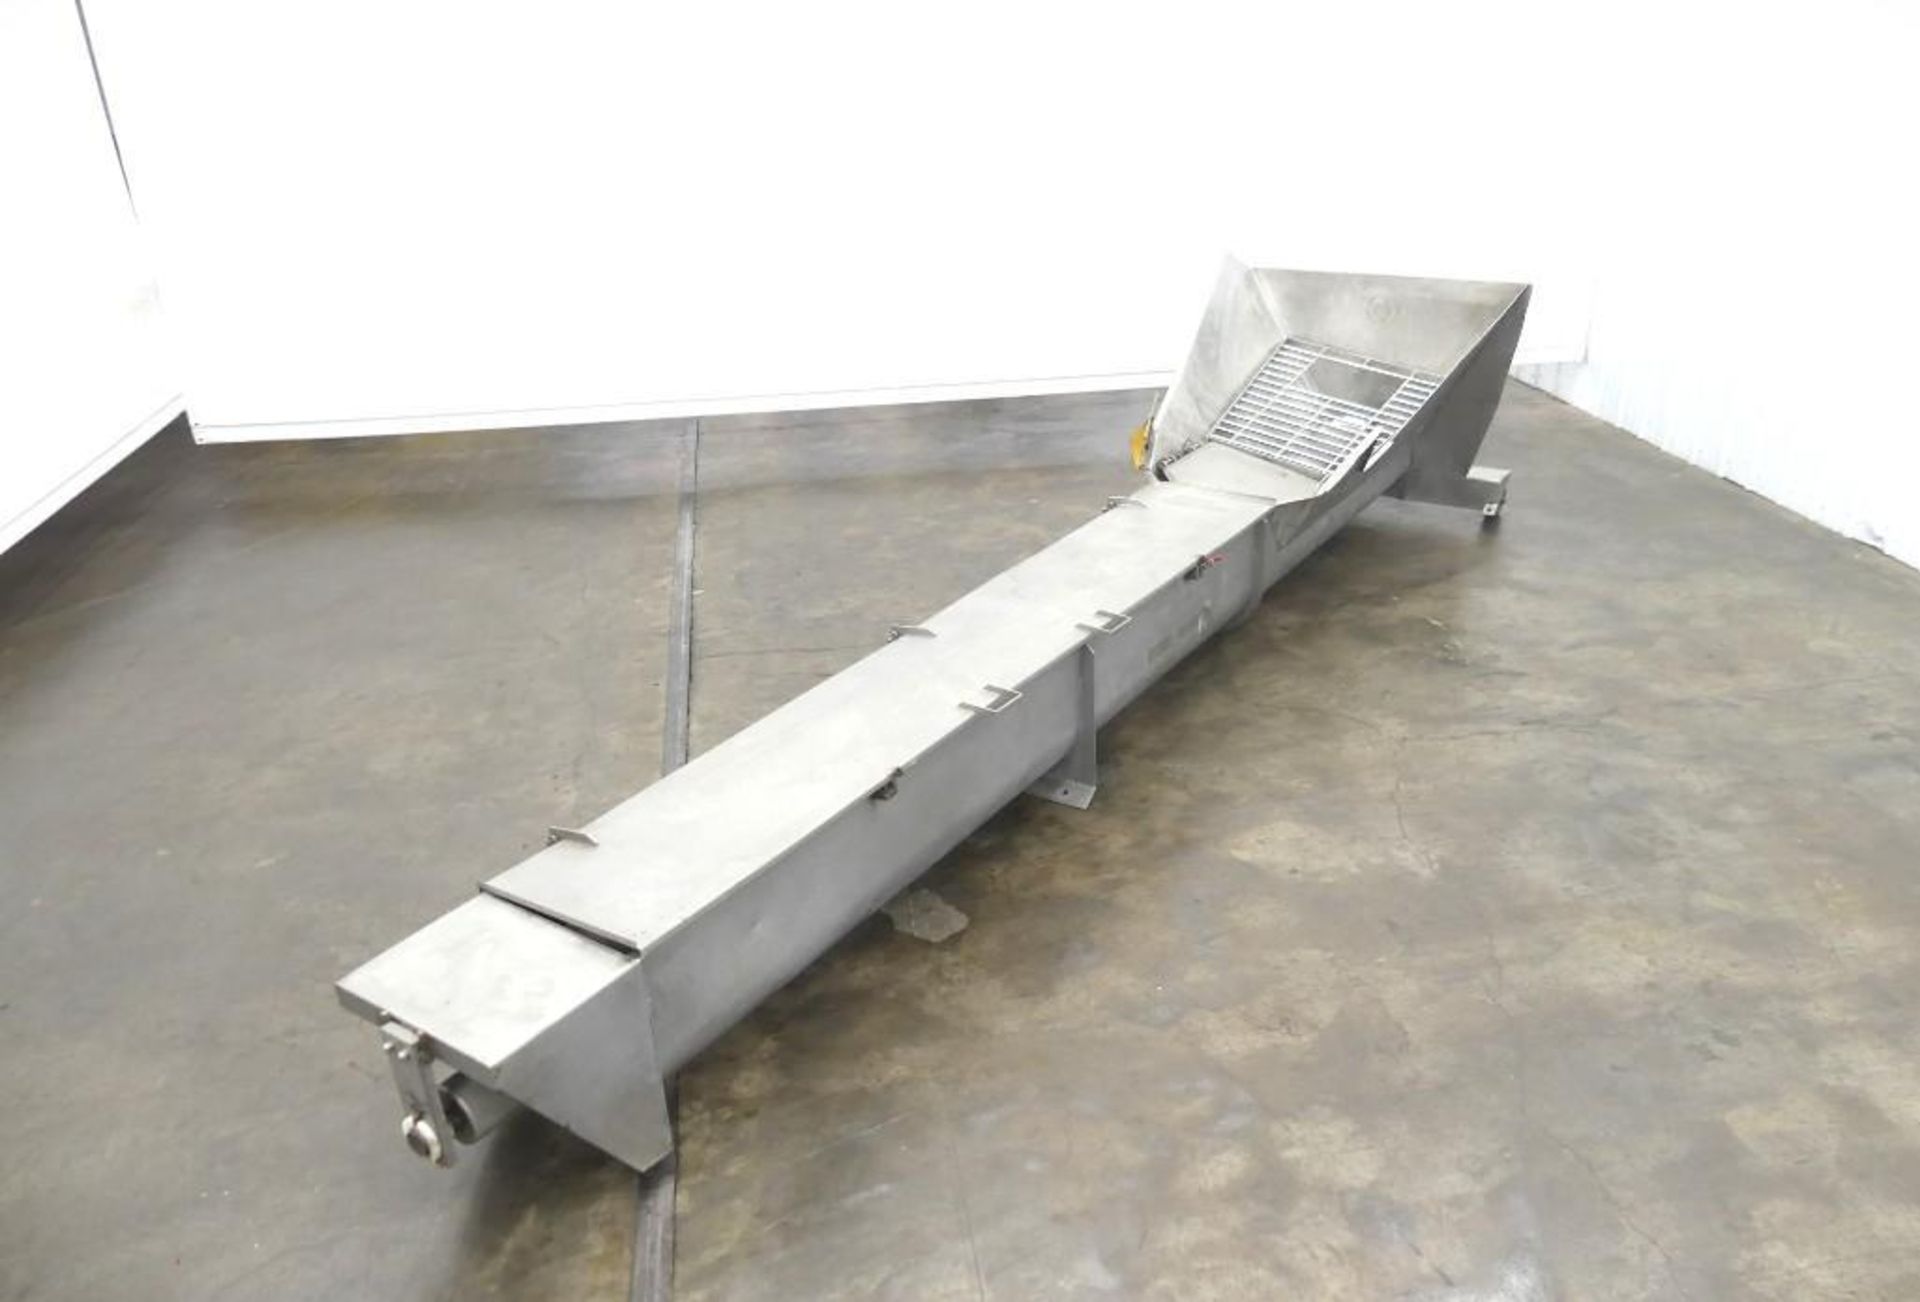 Auger Conveyor 17 Foot Long 15 Inch Diameter - Image 3 of 9